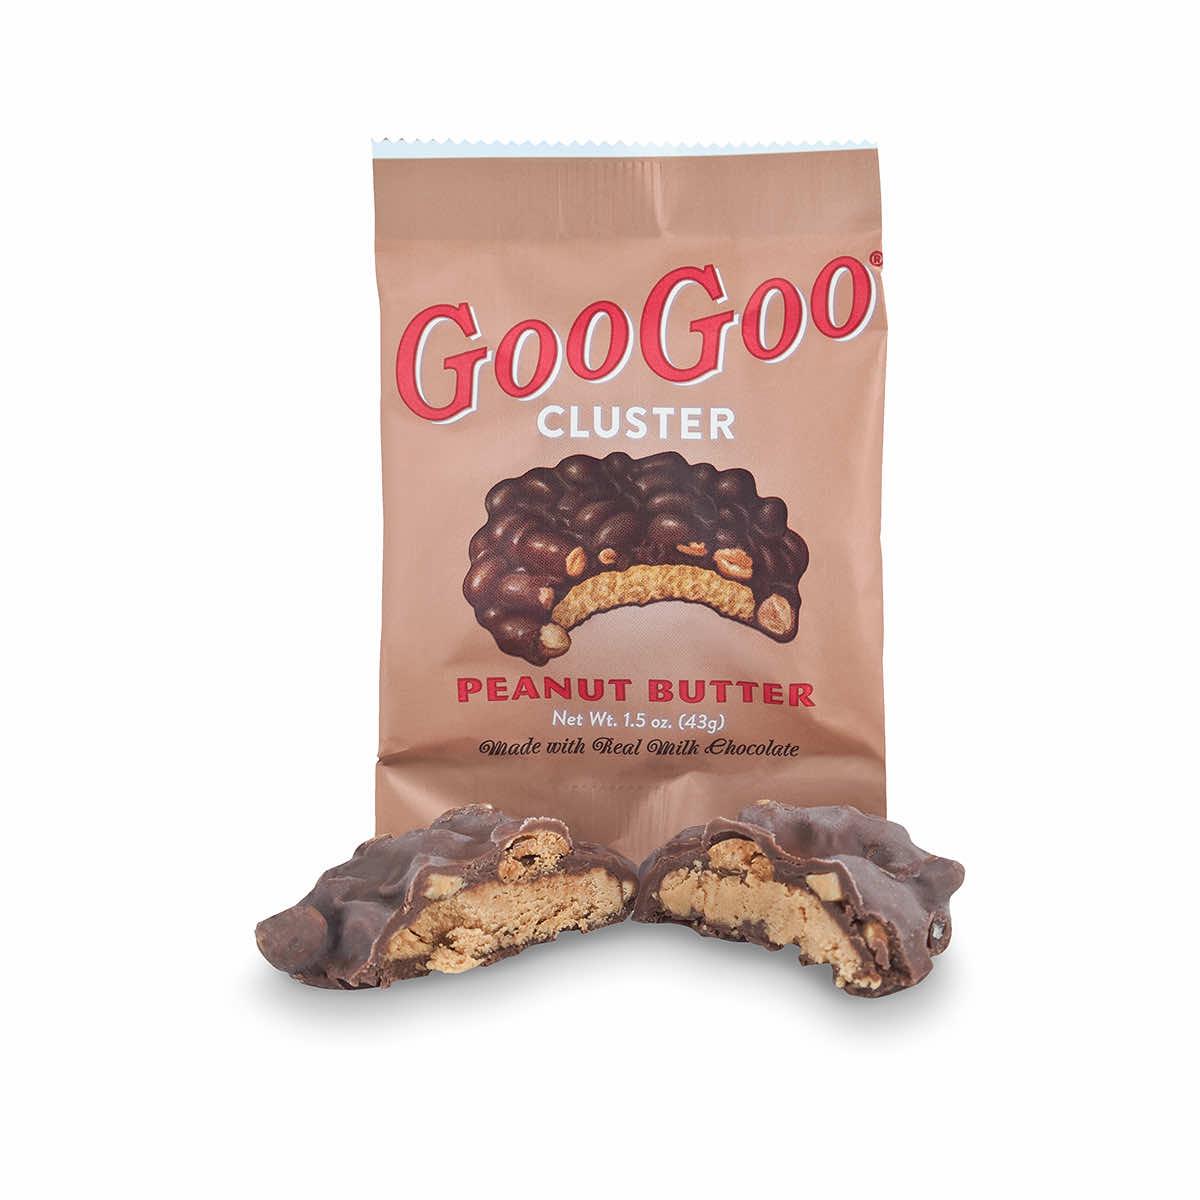 Going Ga Ga for Goo Goo Clusters - Candy Favorites